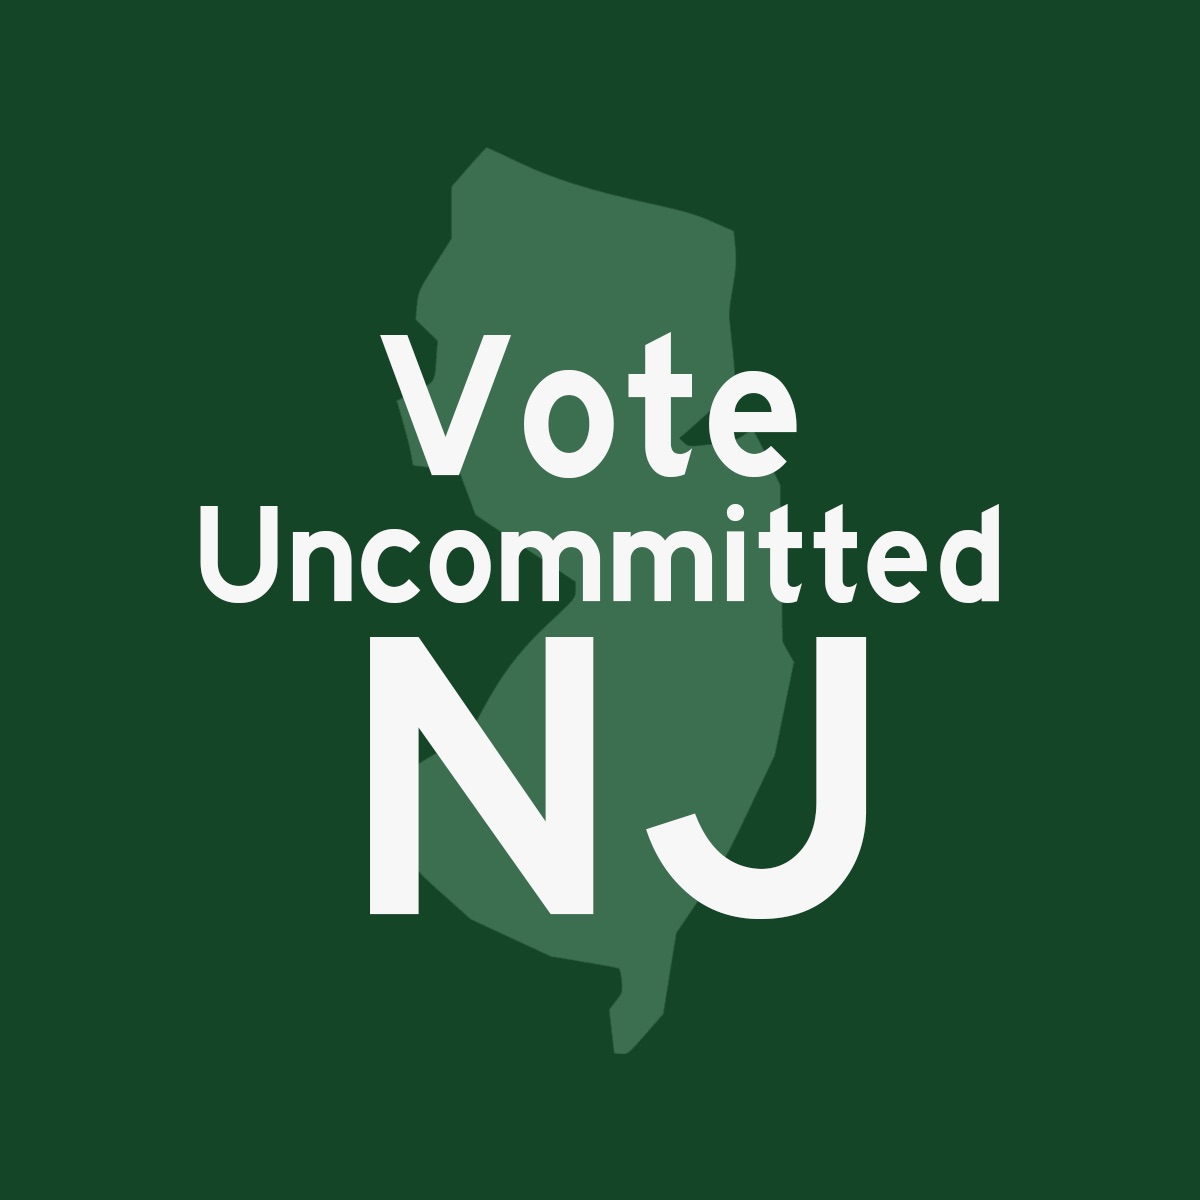 Uncommitted NJ logo